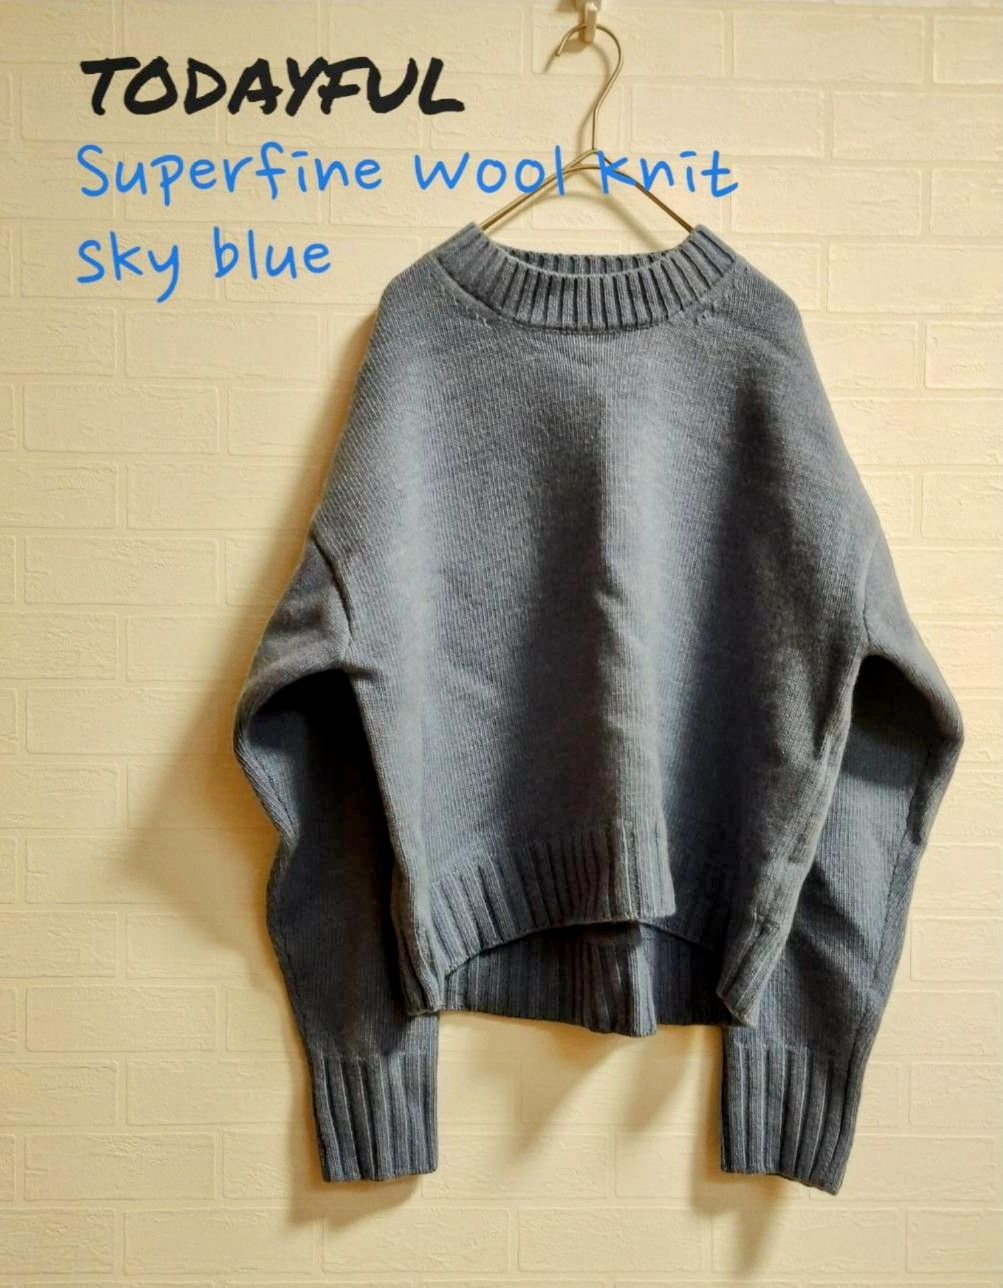 TODAYFUL todayful トゥデイフル Superfine Wool Knit スーパーファインウールニット skyblue スカイブルー  - メルカリ